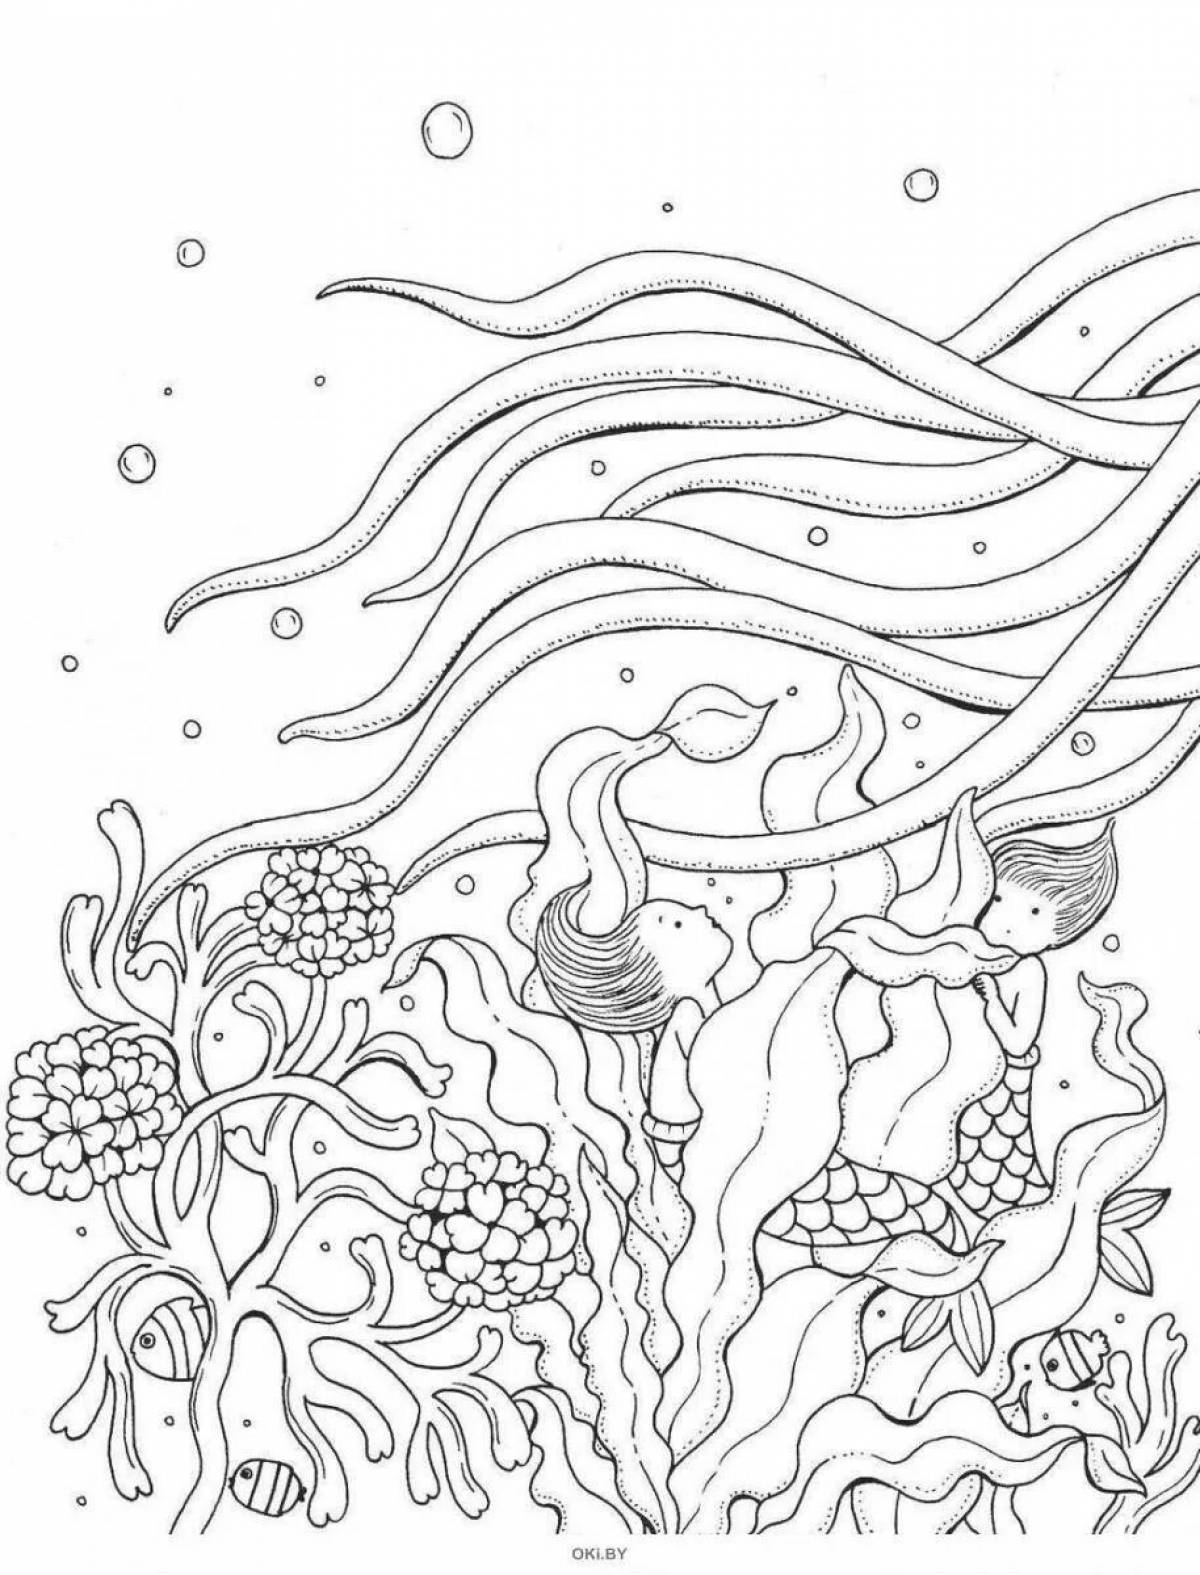 Magic mermaid coloring page